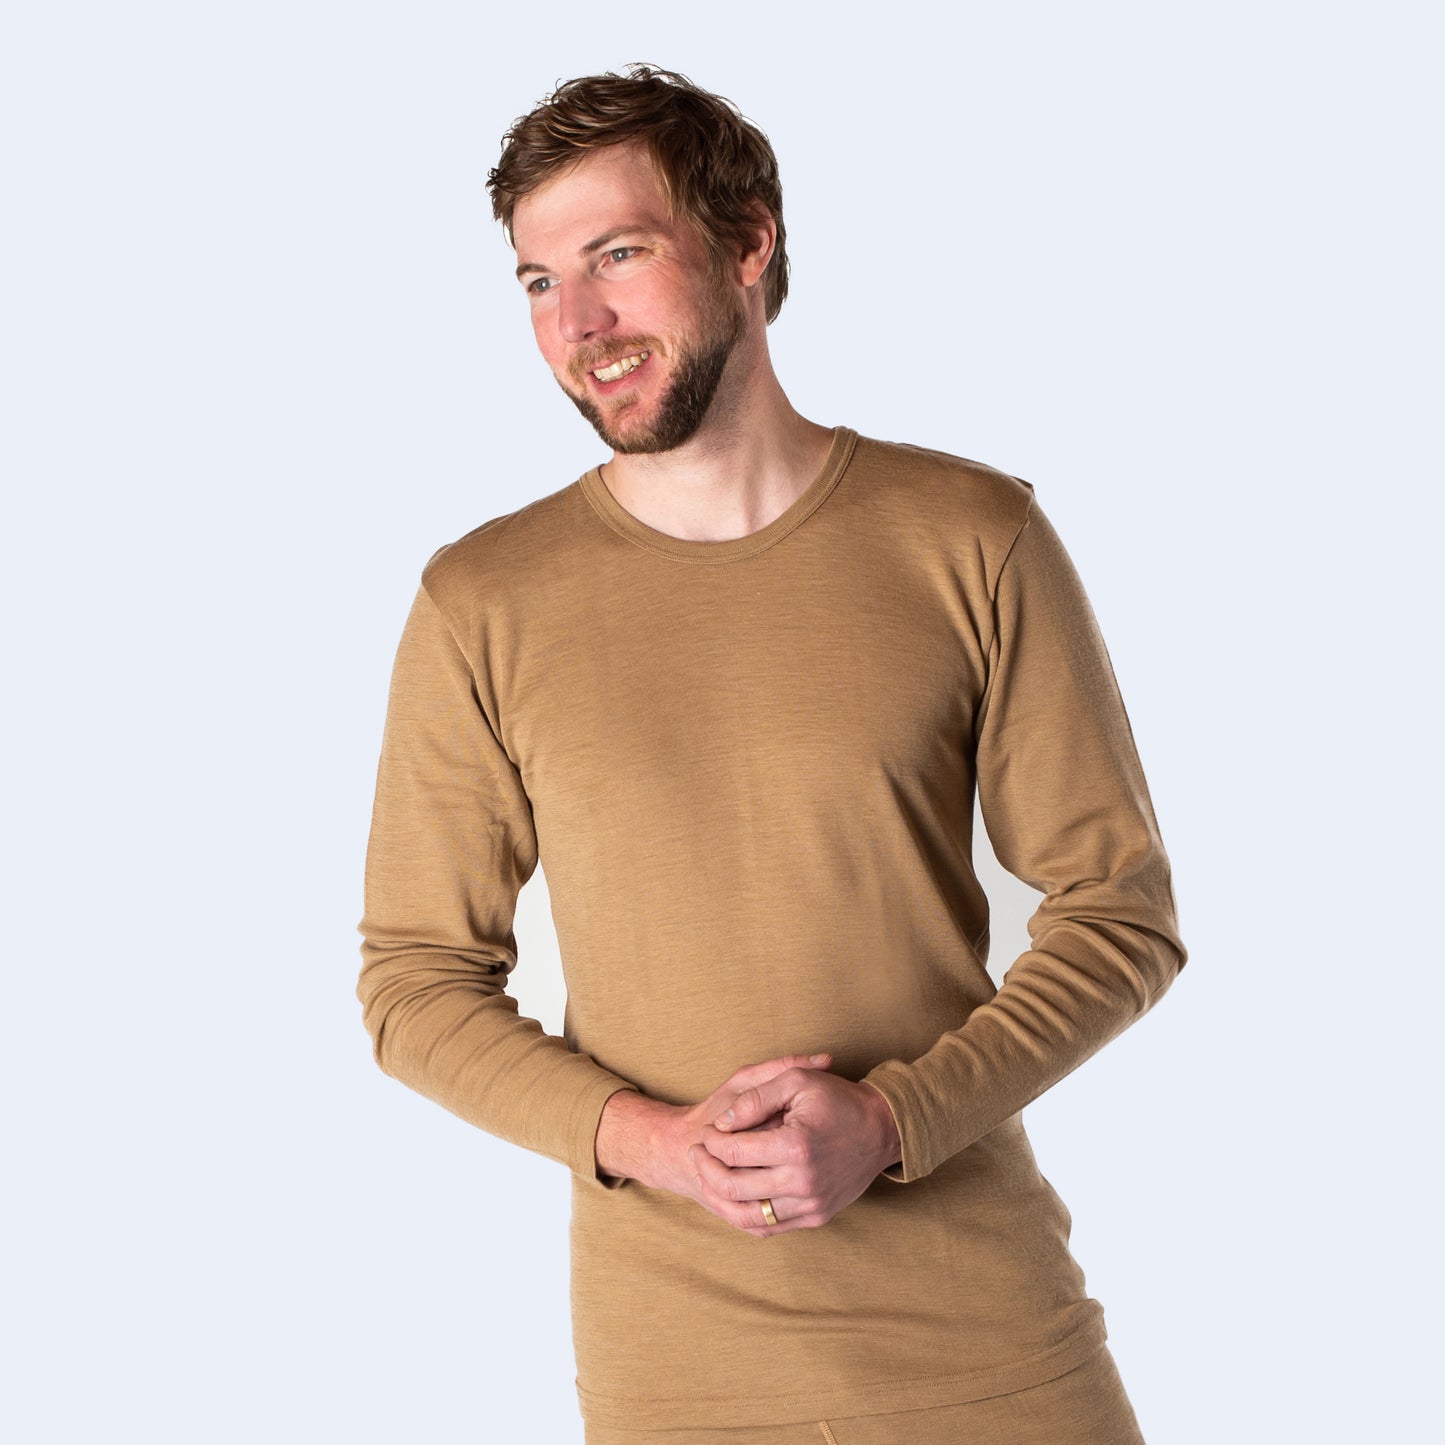 Hocosa Organic Wool/Silk Long-Underwear Shirt with – Danish Woolen  Delight